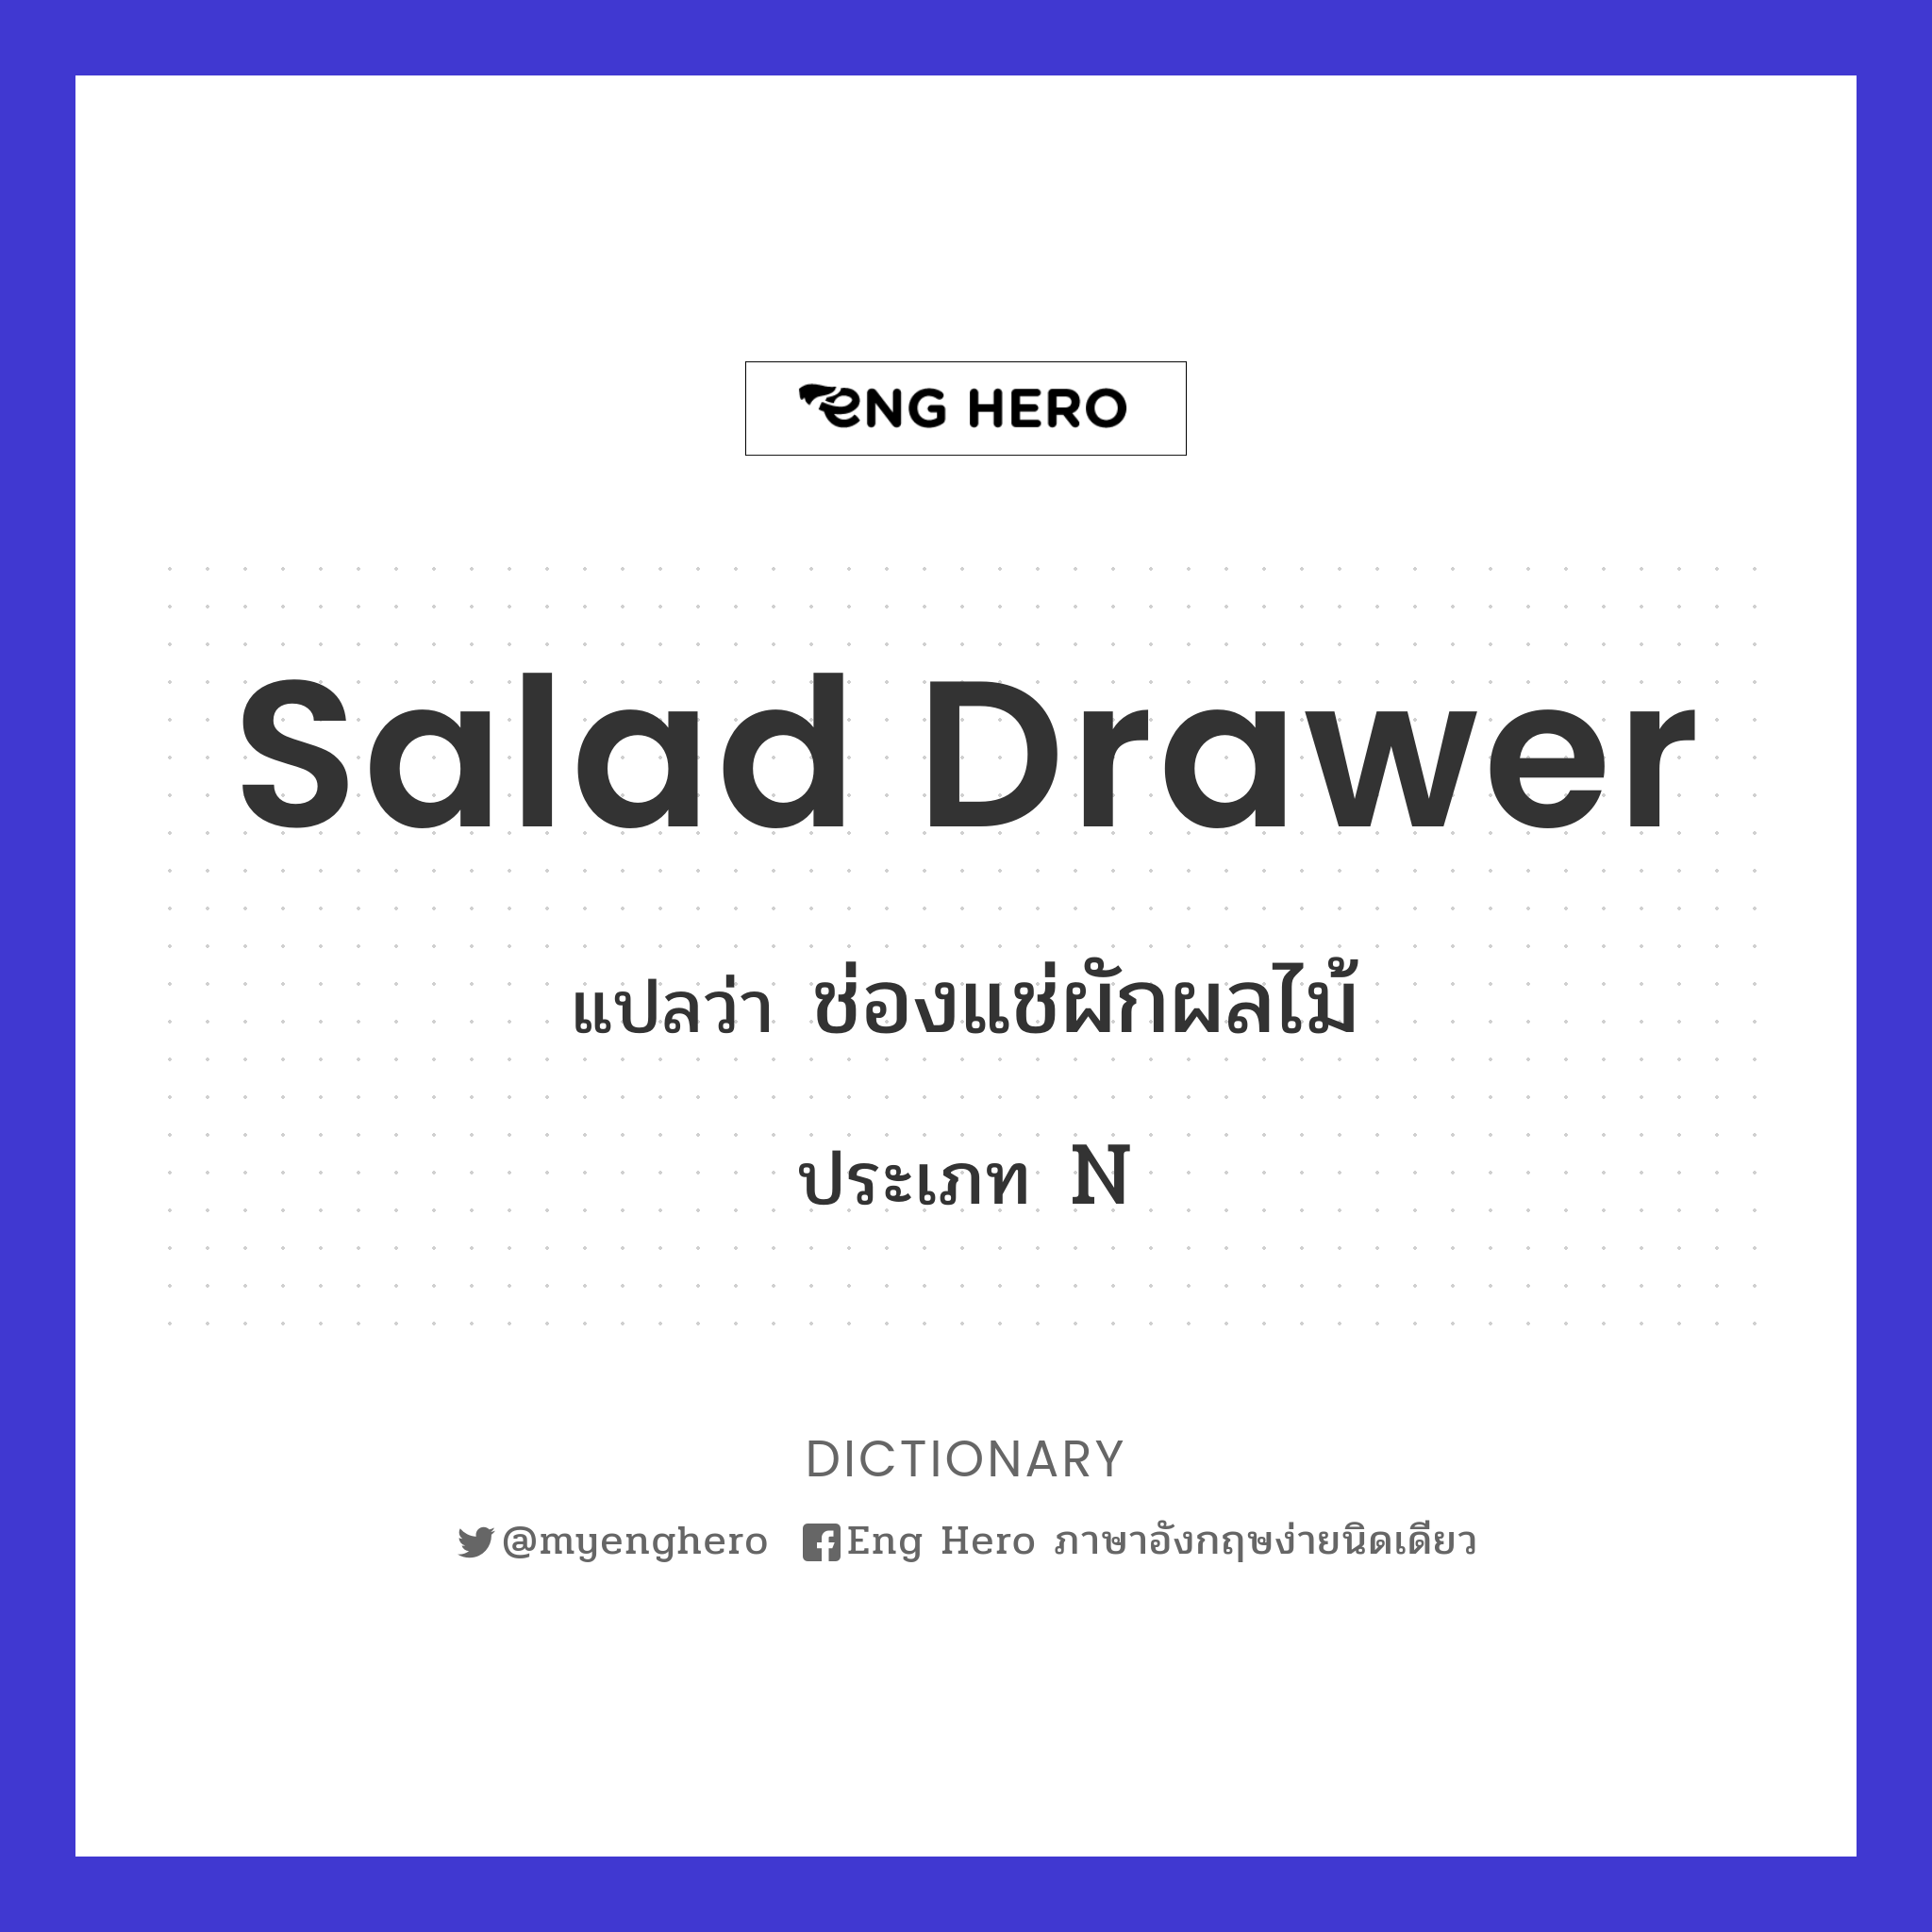 salad drawer